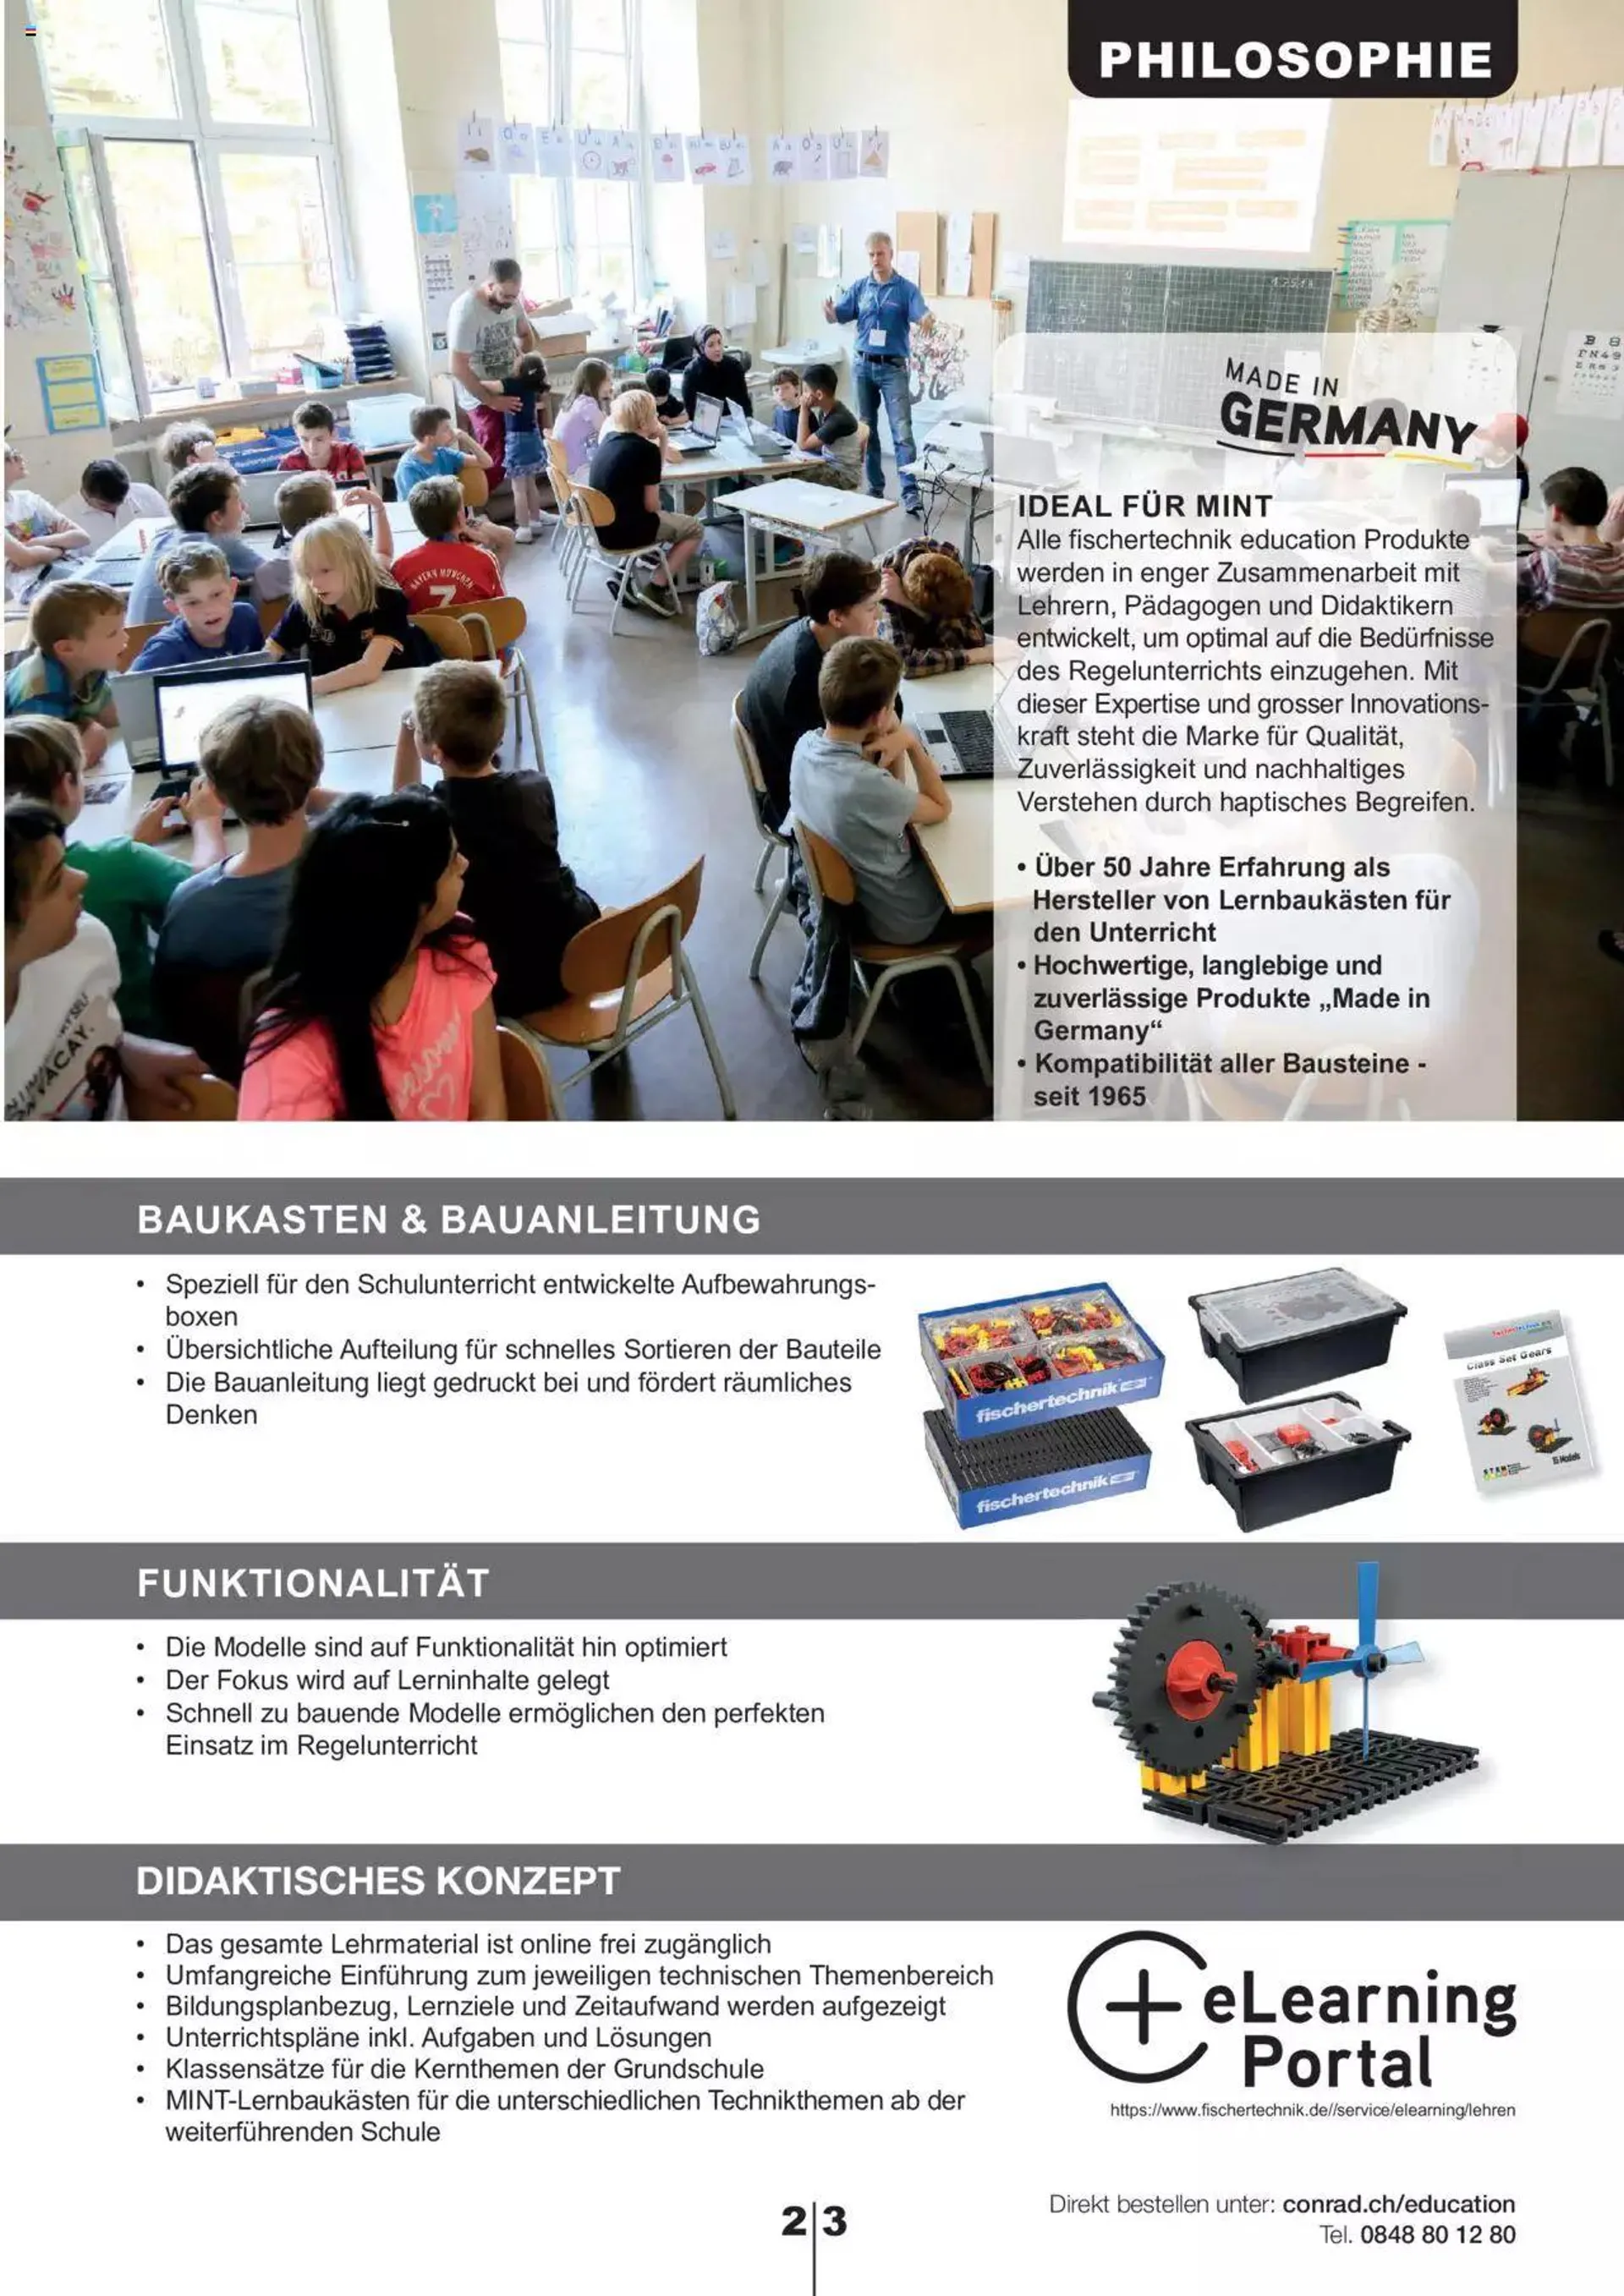 Conrad - Fischertechnik Education - 2